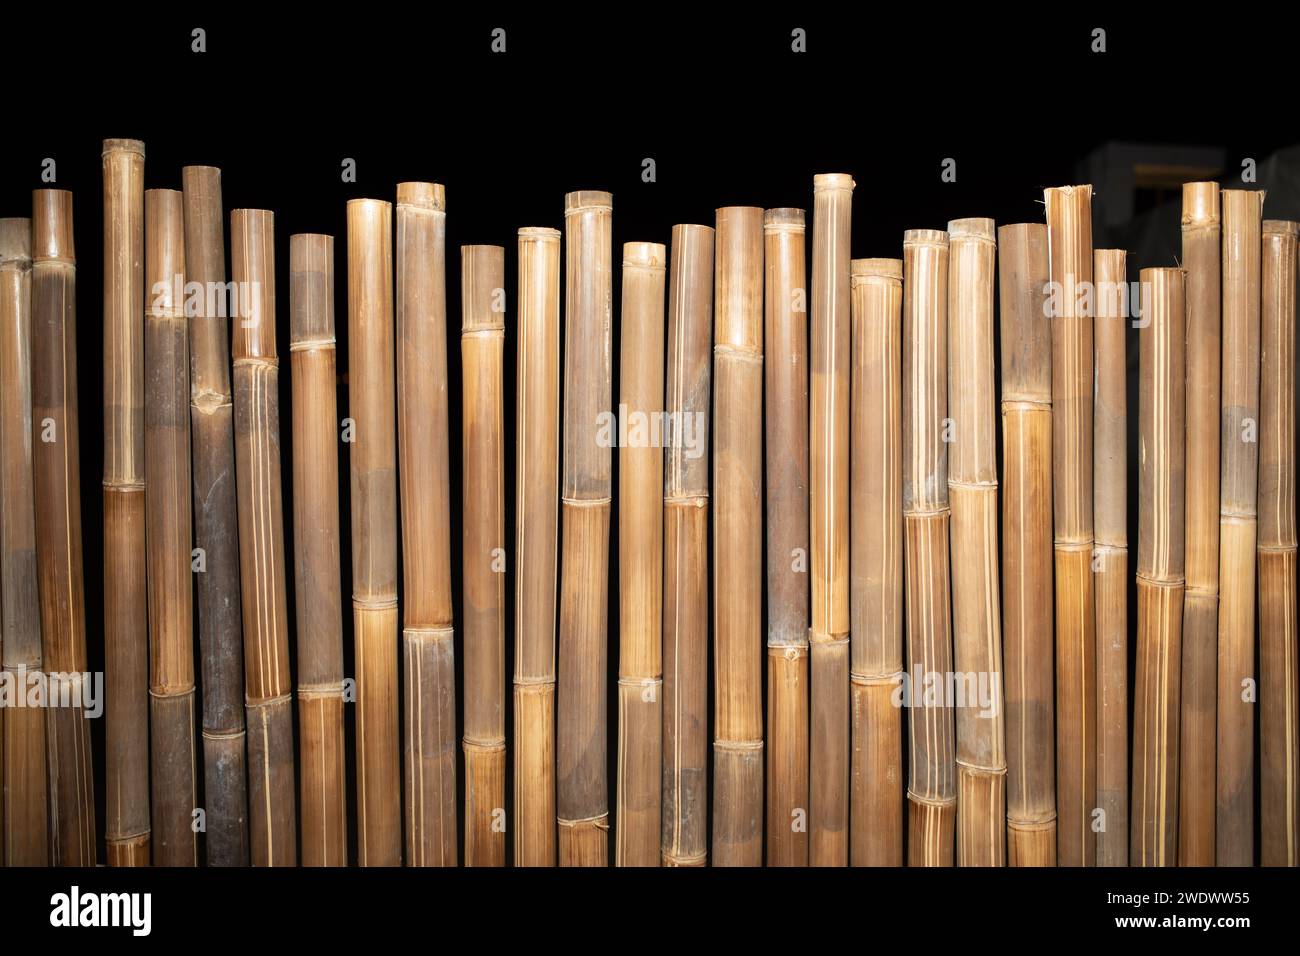 stecca di bambù di fondo erboso. Foto di alta qualità Foto Stock